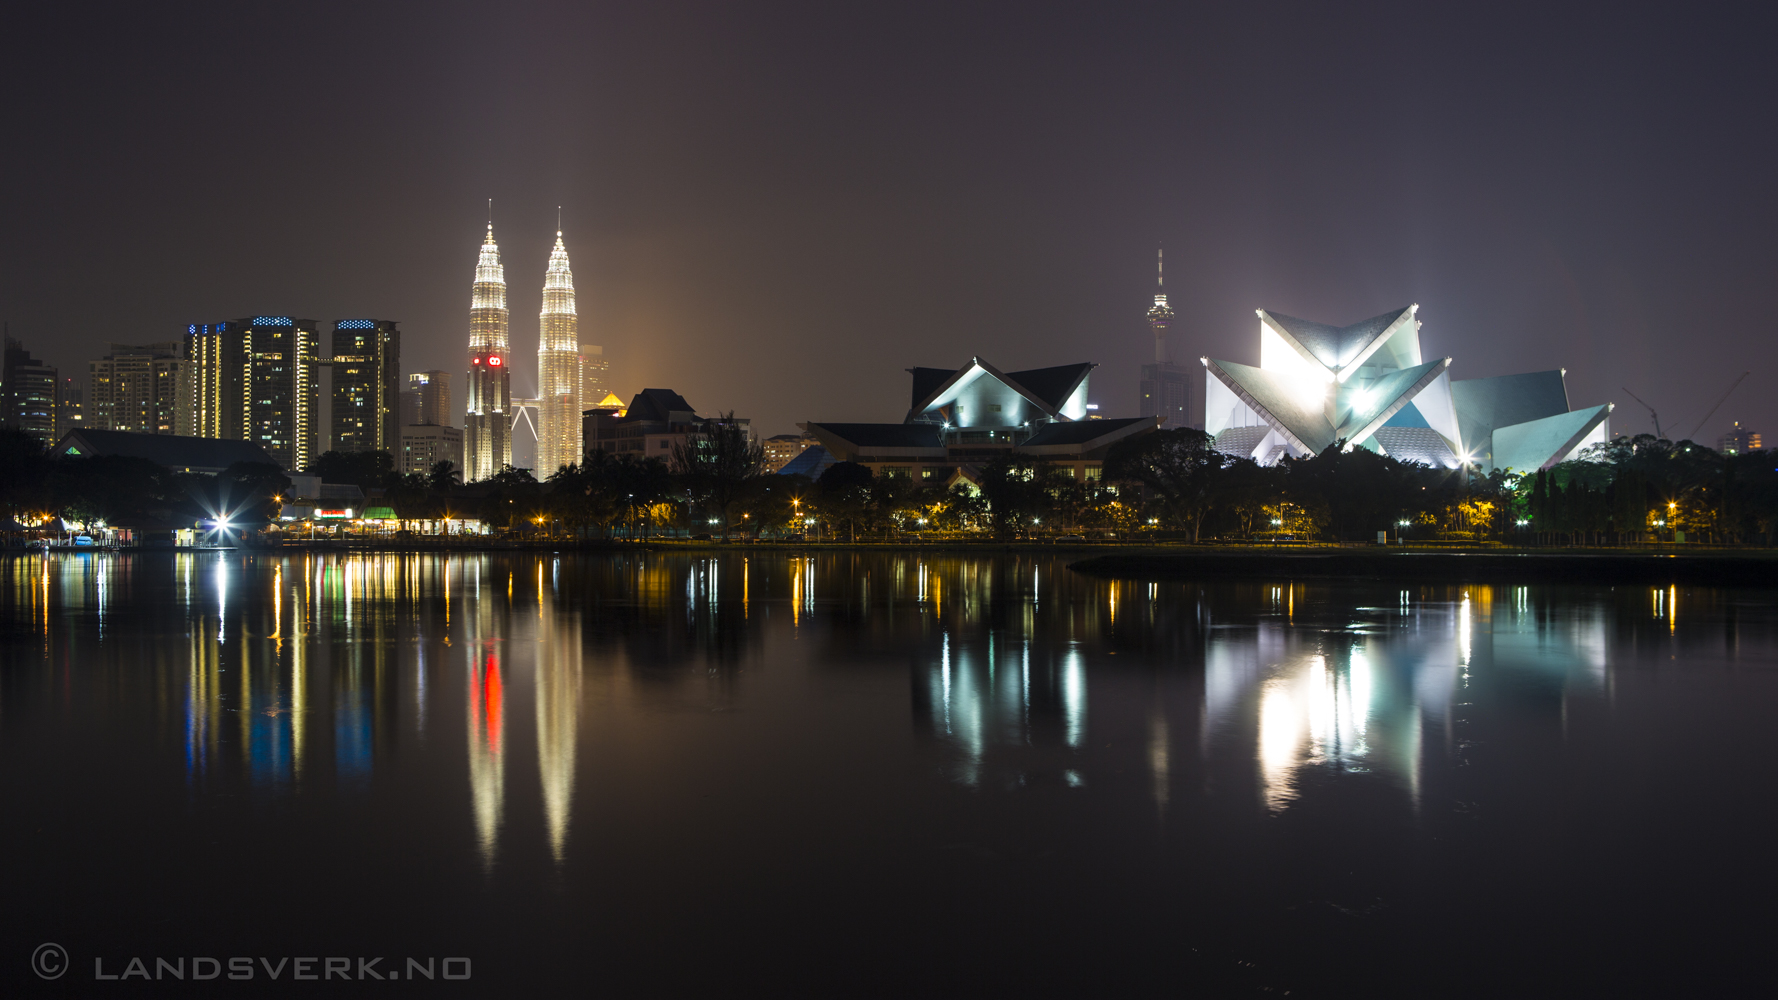 Titiwangsa Lake Park. Kuala Lumpur, Malaysia.

(Canon EOS 5D Mark III / Canon EF 24-70mm f/2.8 L USM)